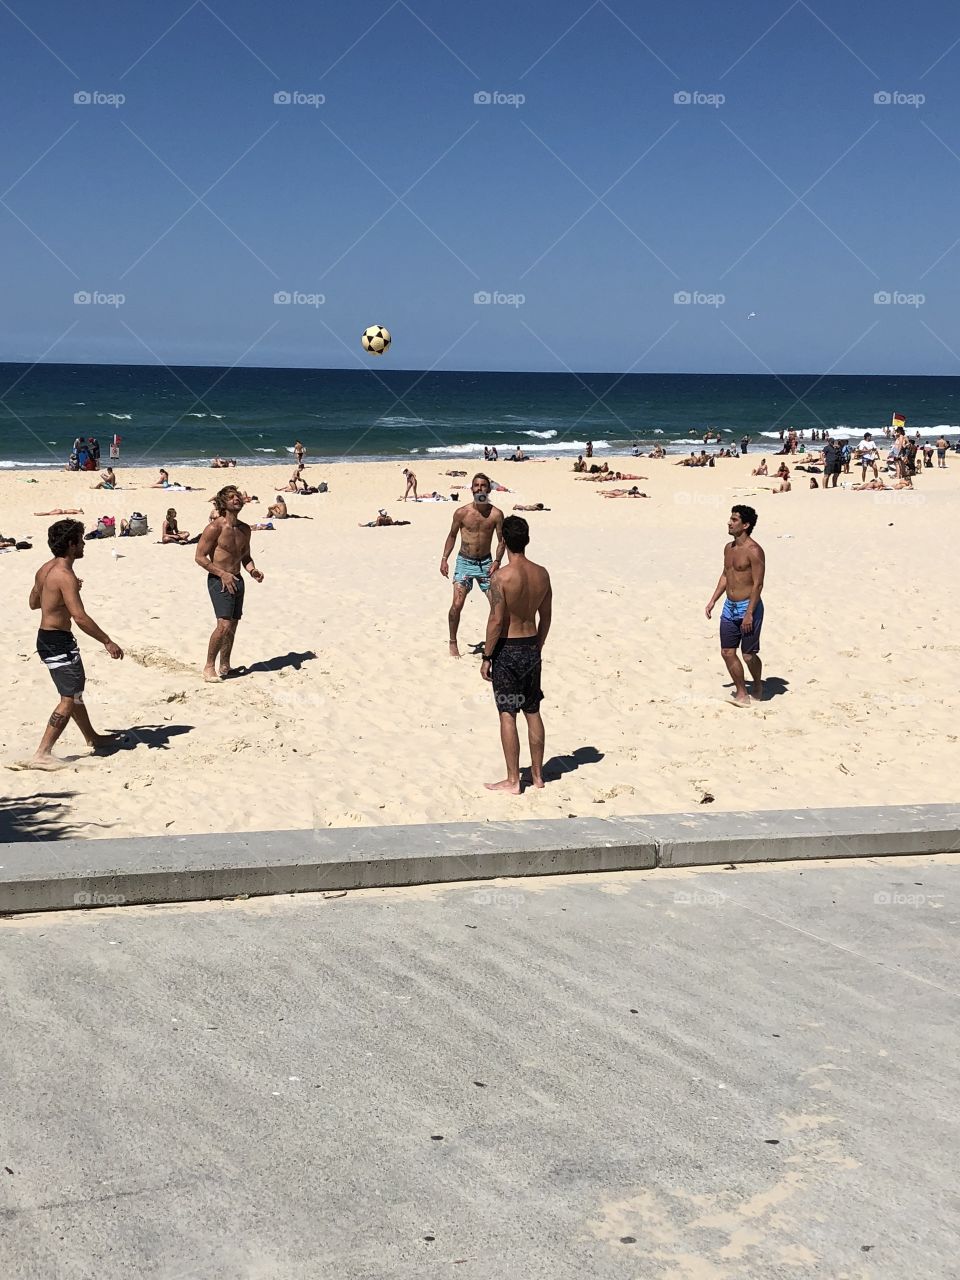 Playing ball on beach